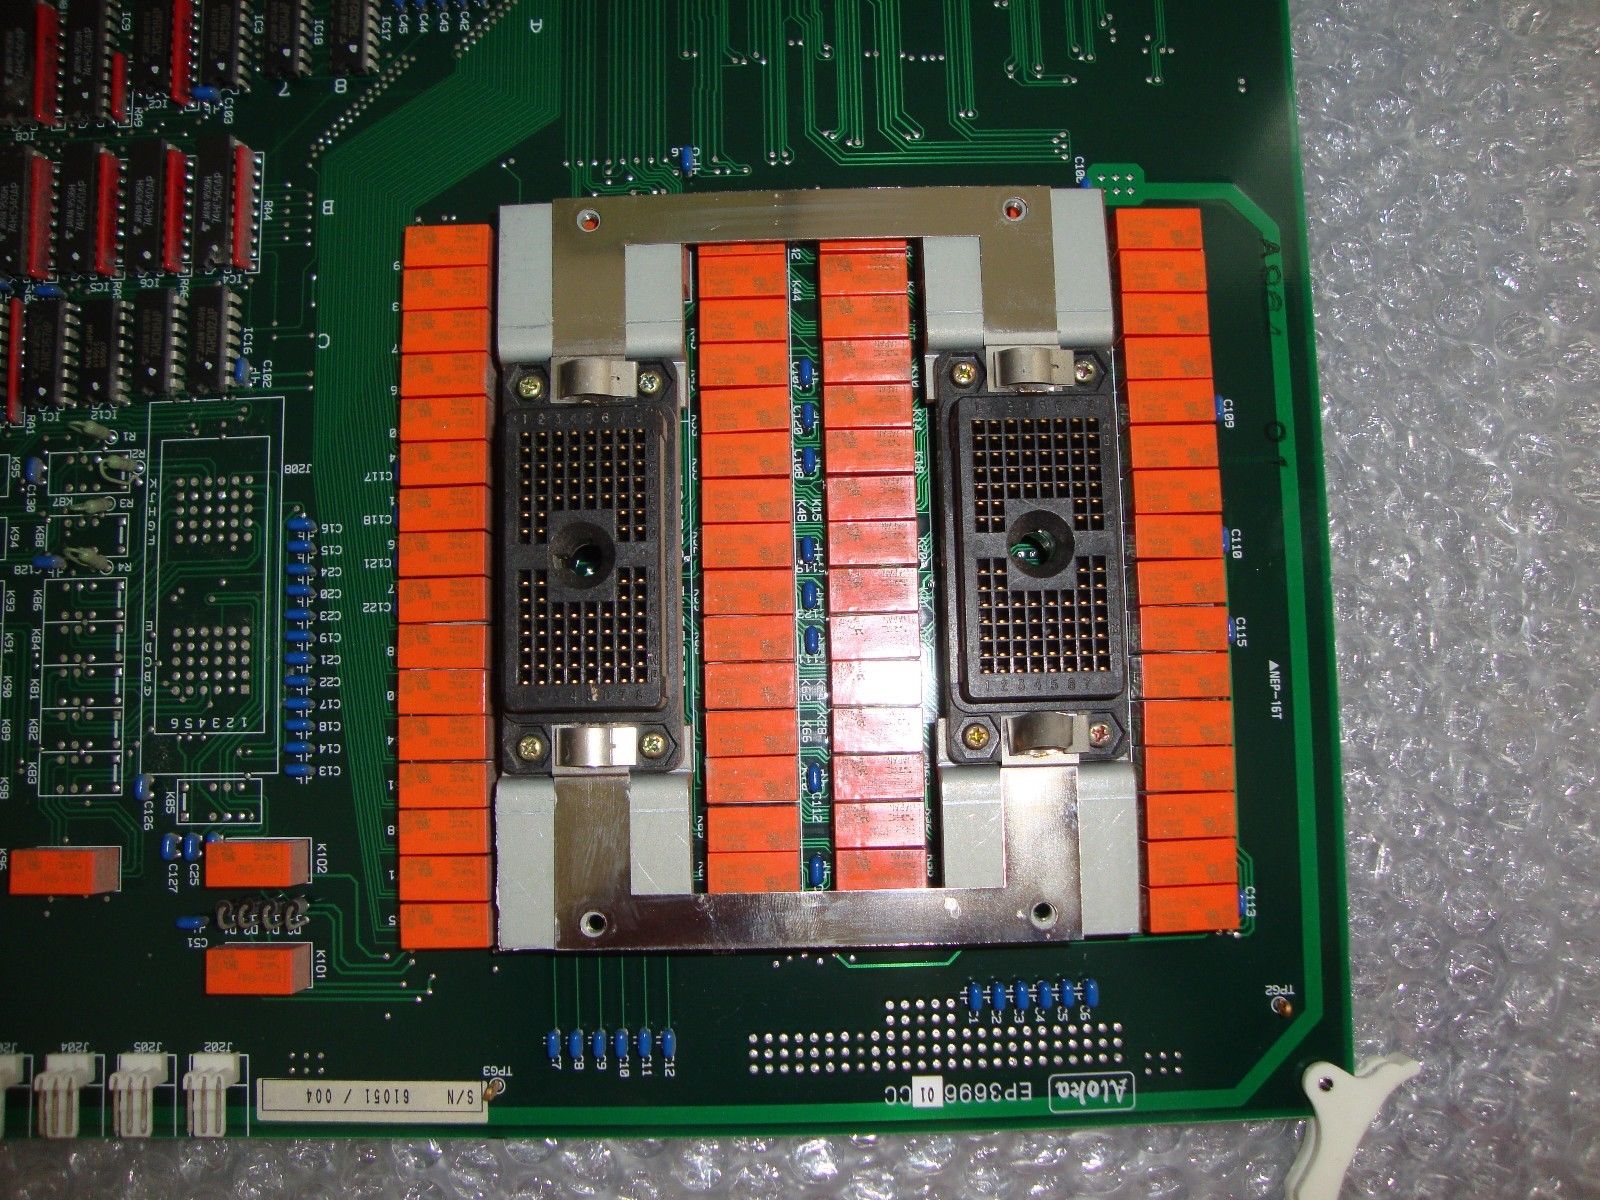 ALOKA SSD-1100 Ultrasound board  ep369601cc DIAGNOSTIC ULTRASOUND MACHINES FOR SALE